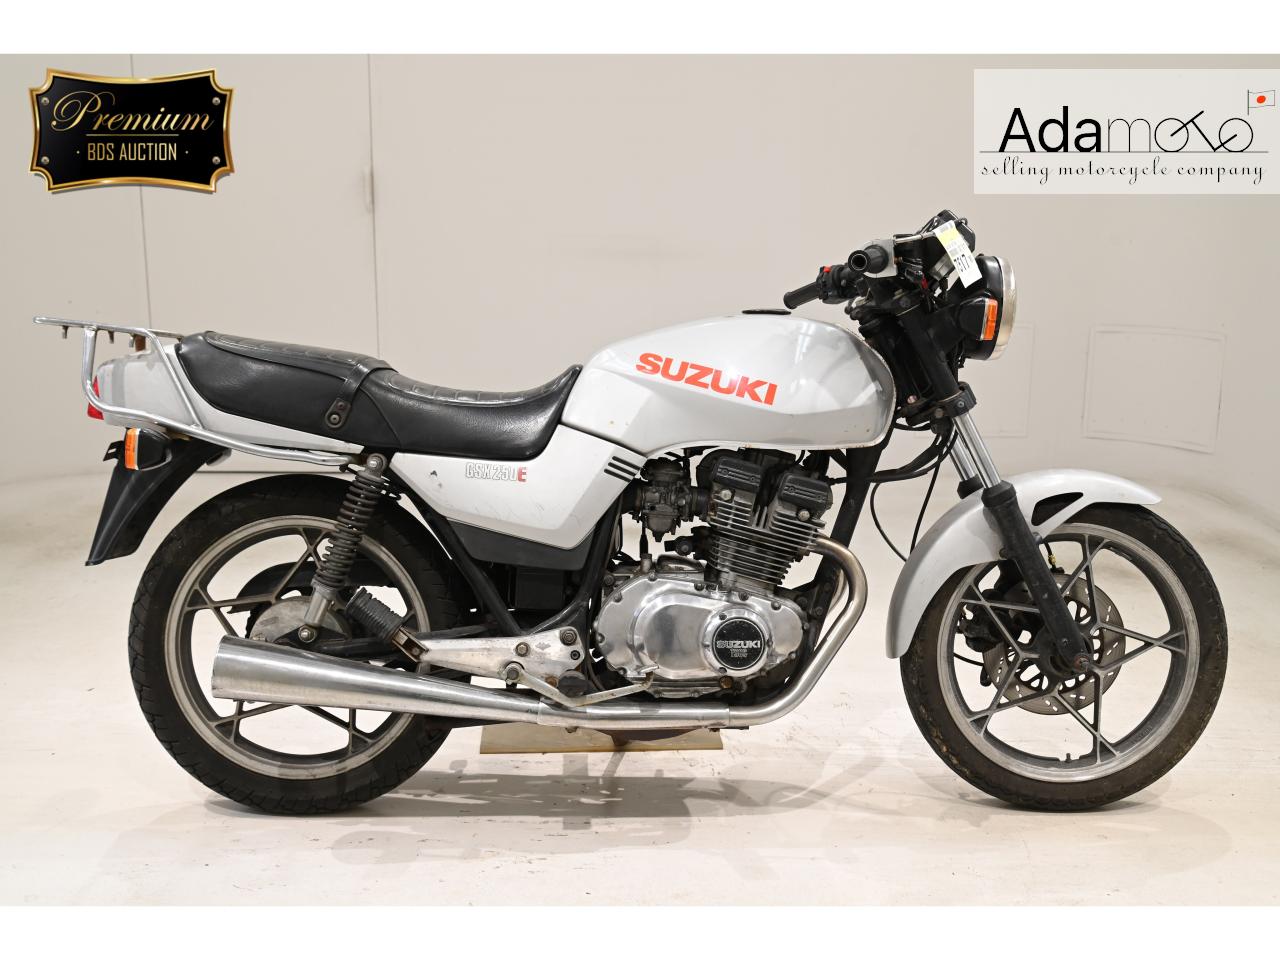 Suzuki GSX250E - Adamoto - Motorcycles from Japan